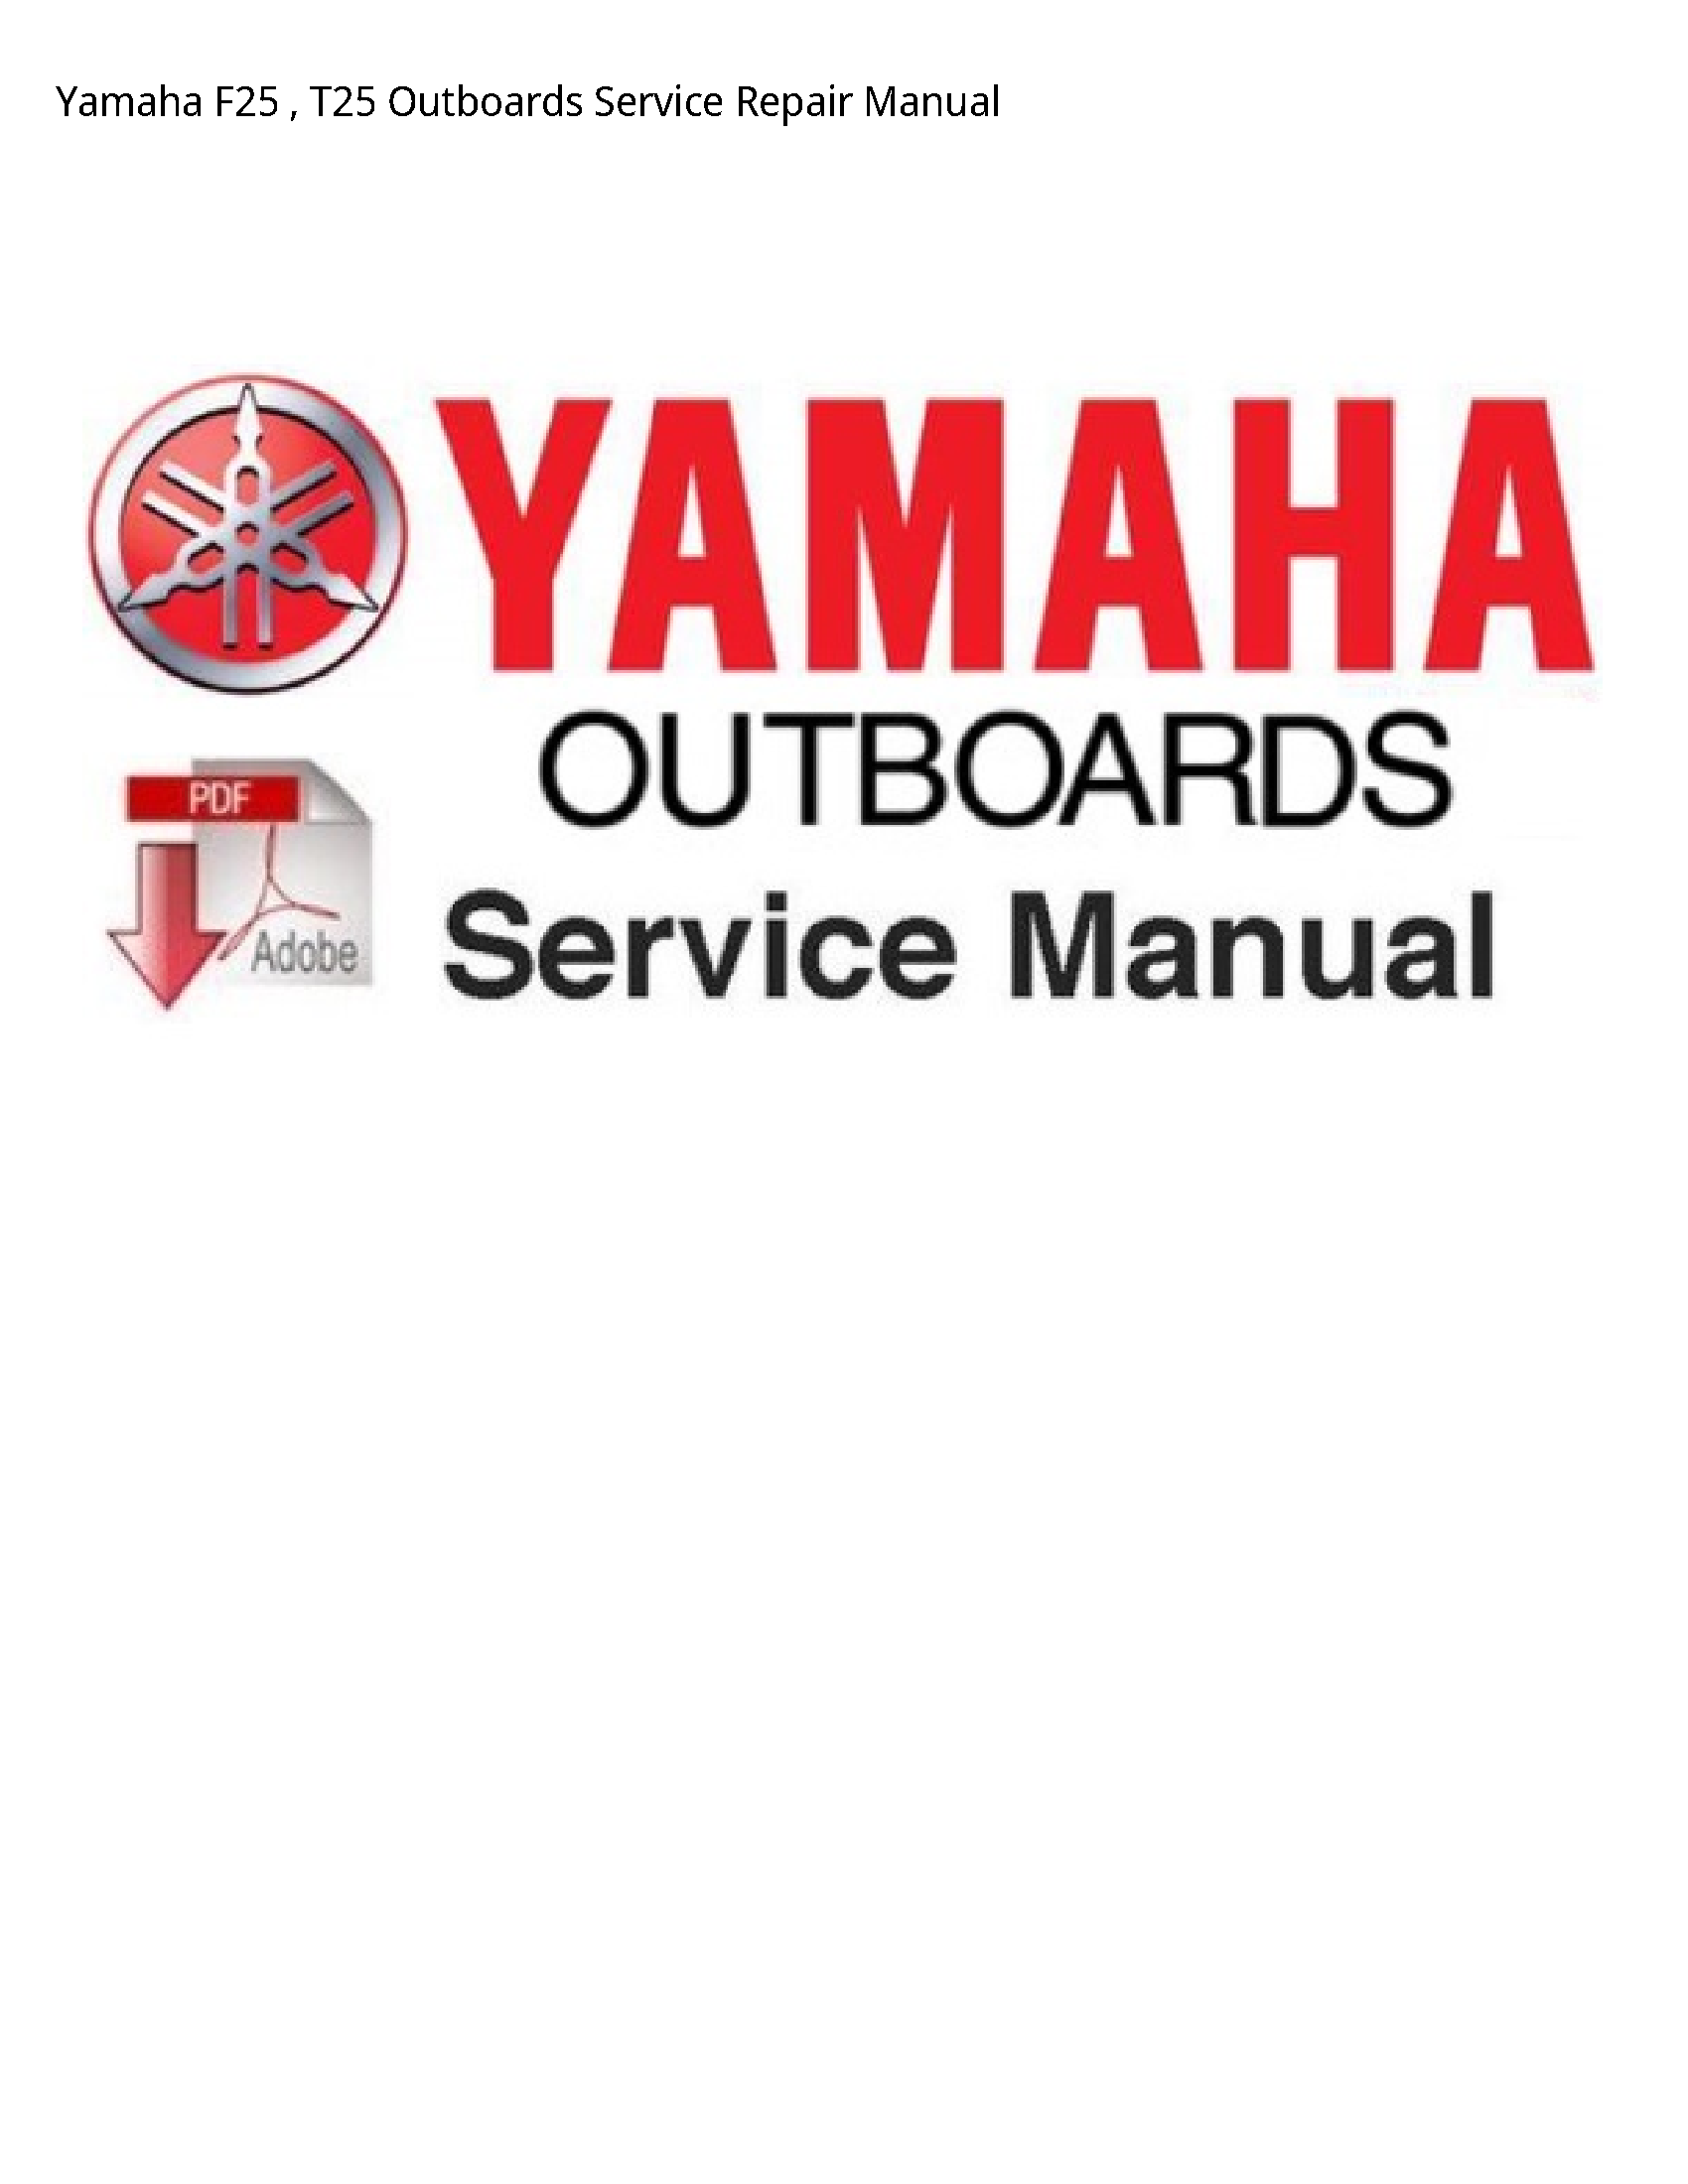 Yamaha F25 Outboards manual